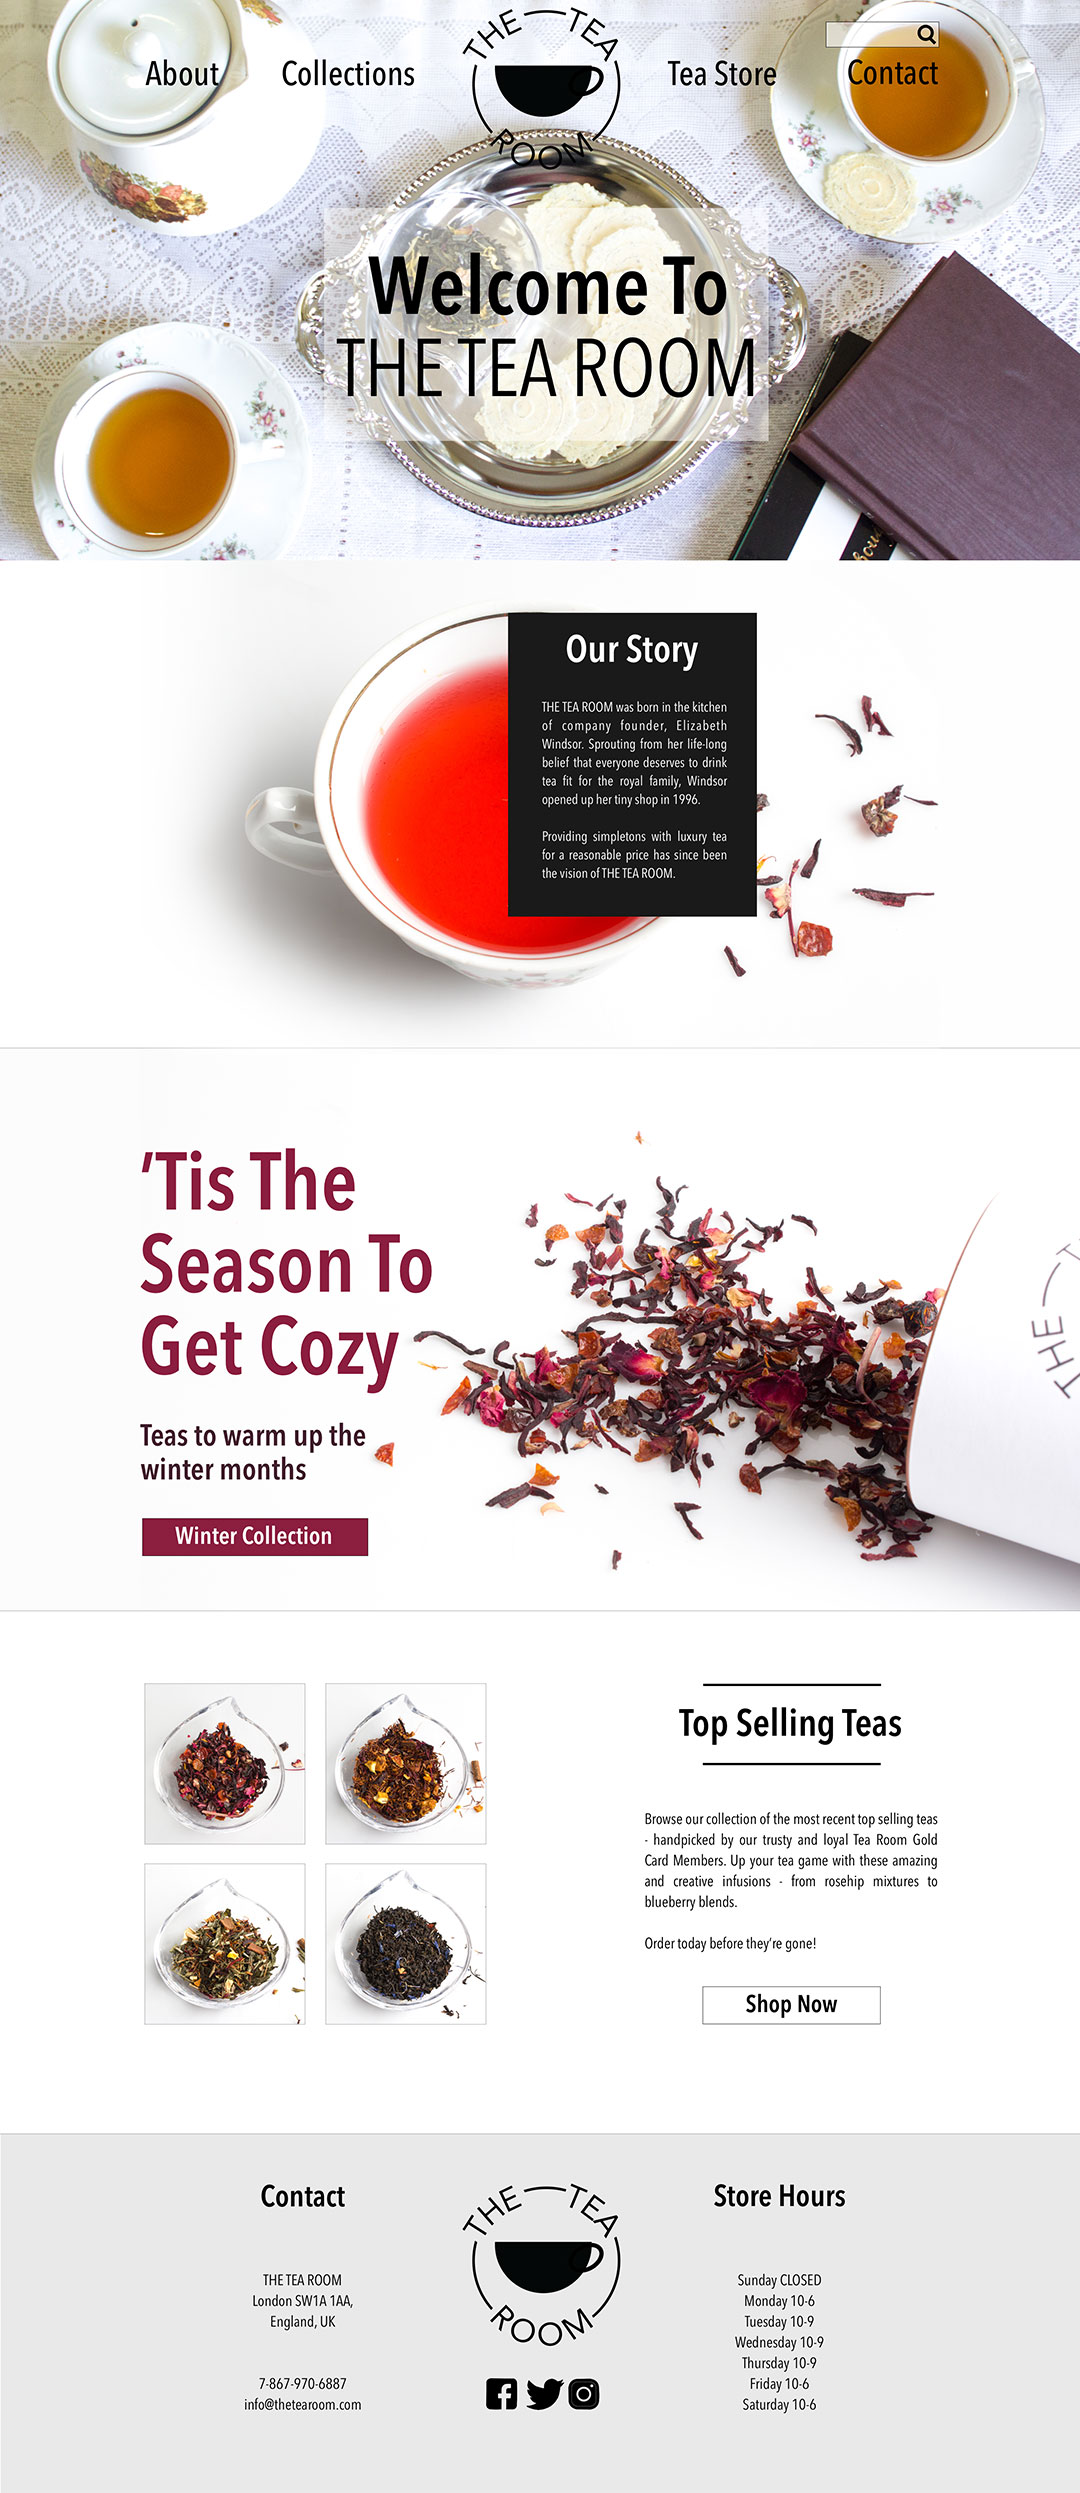 The Tea Room Home Page